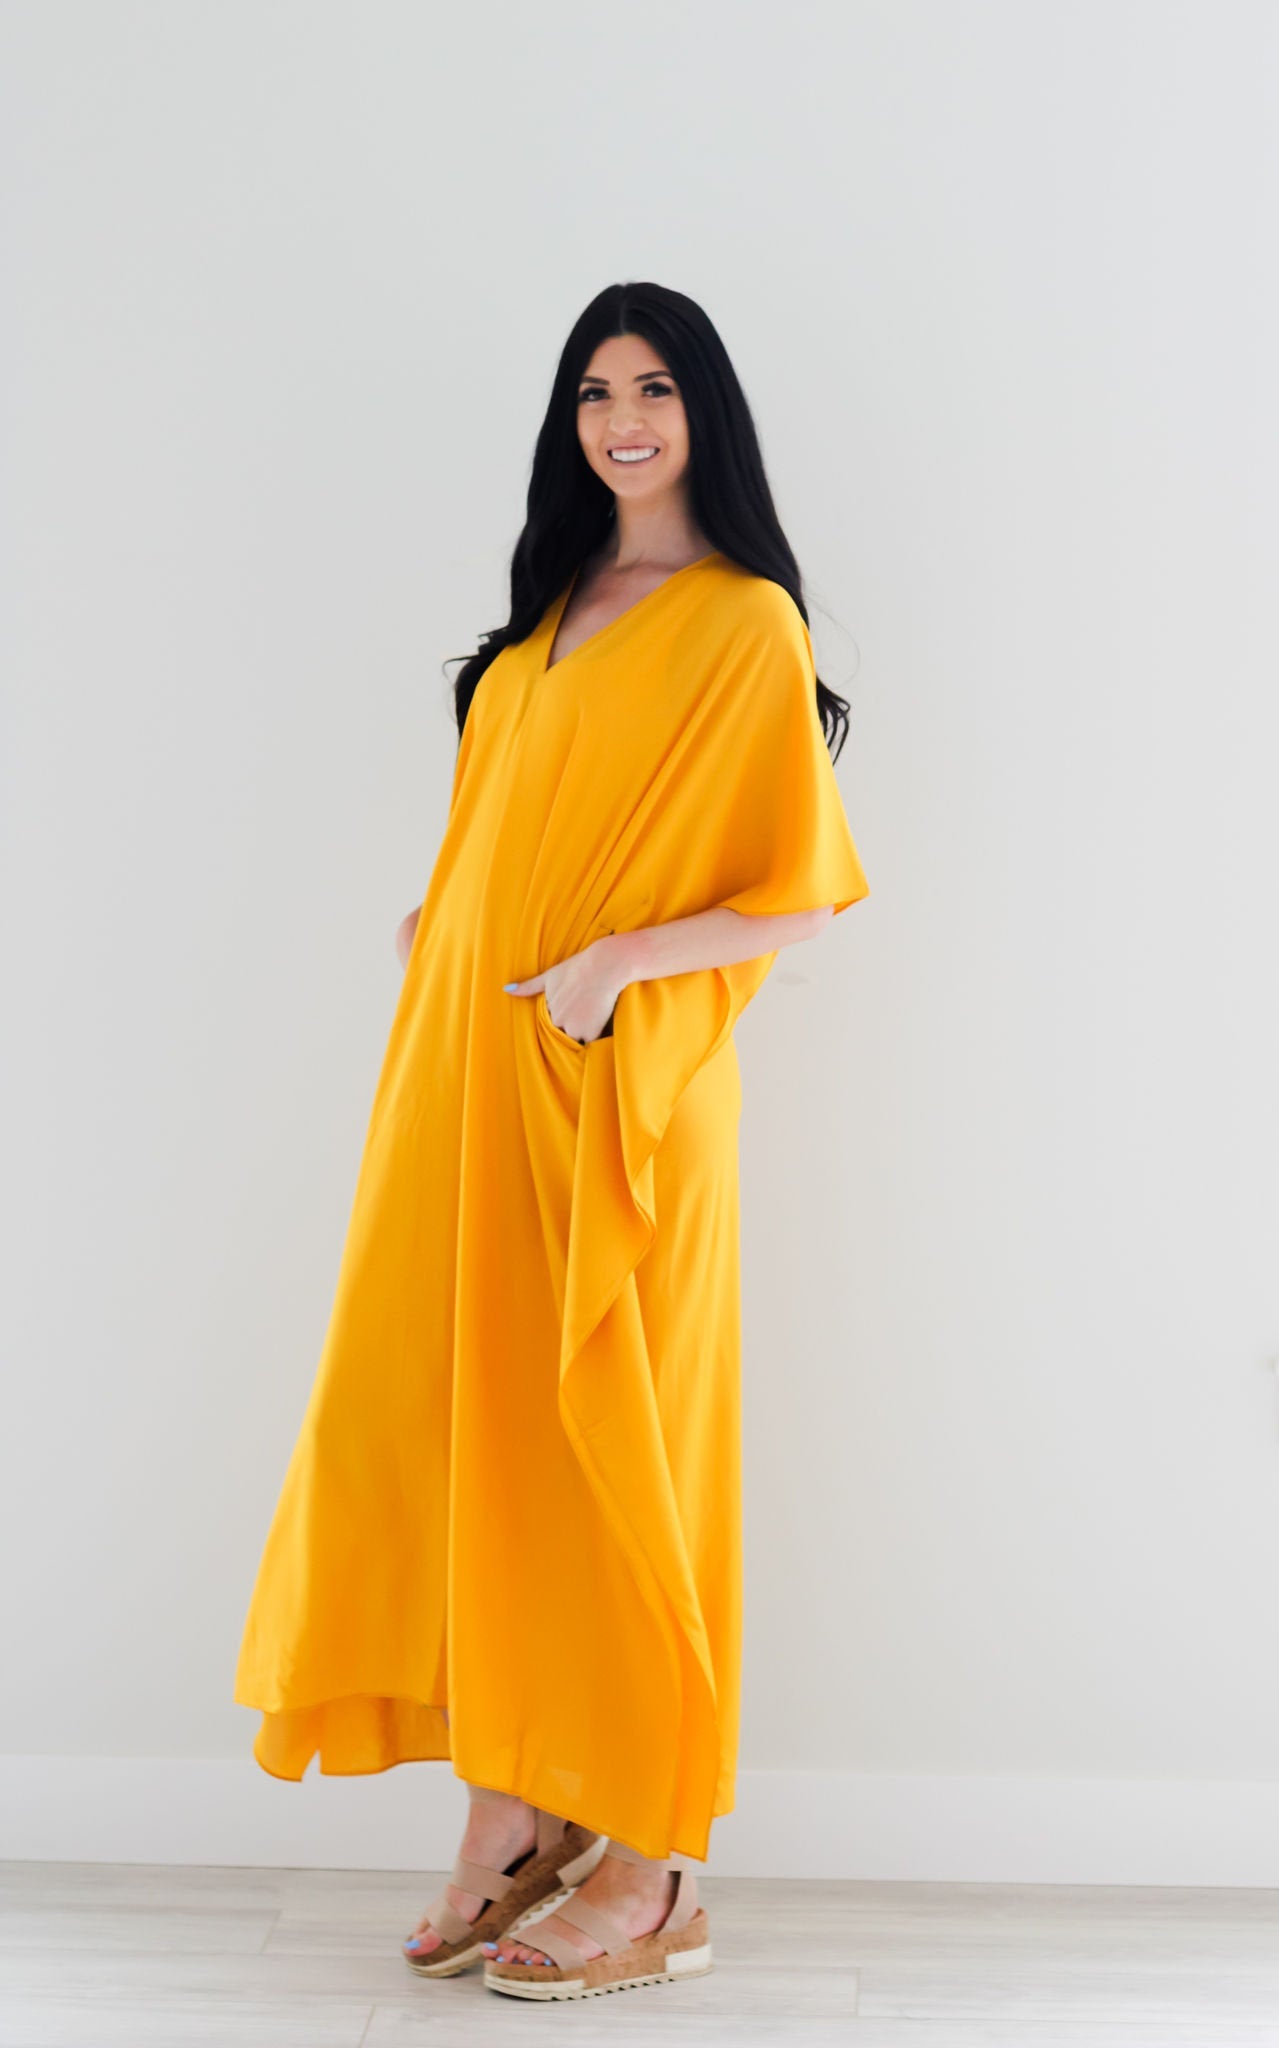 Golden Yellow Kaftan Dress, Maxi Cotton Caftan, Plus Size Kaftan Dress, Maternity Dress